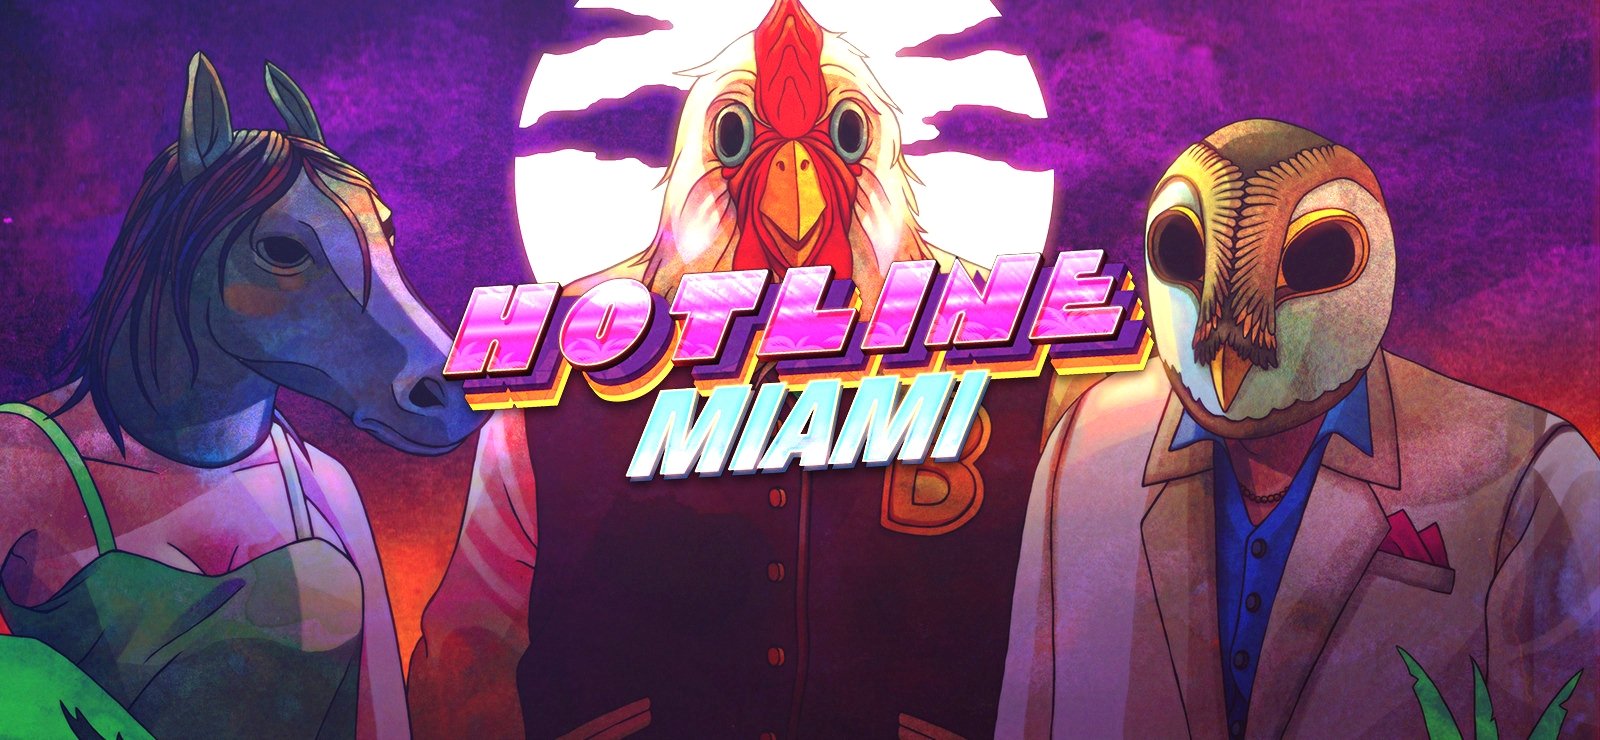 Hotline miami crystals. Hotline Miami игра. Хотлайн Майами 1. Генерал Хотлайн Майами.